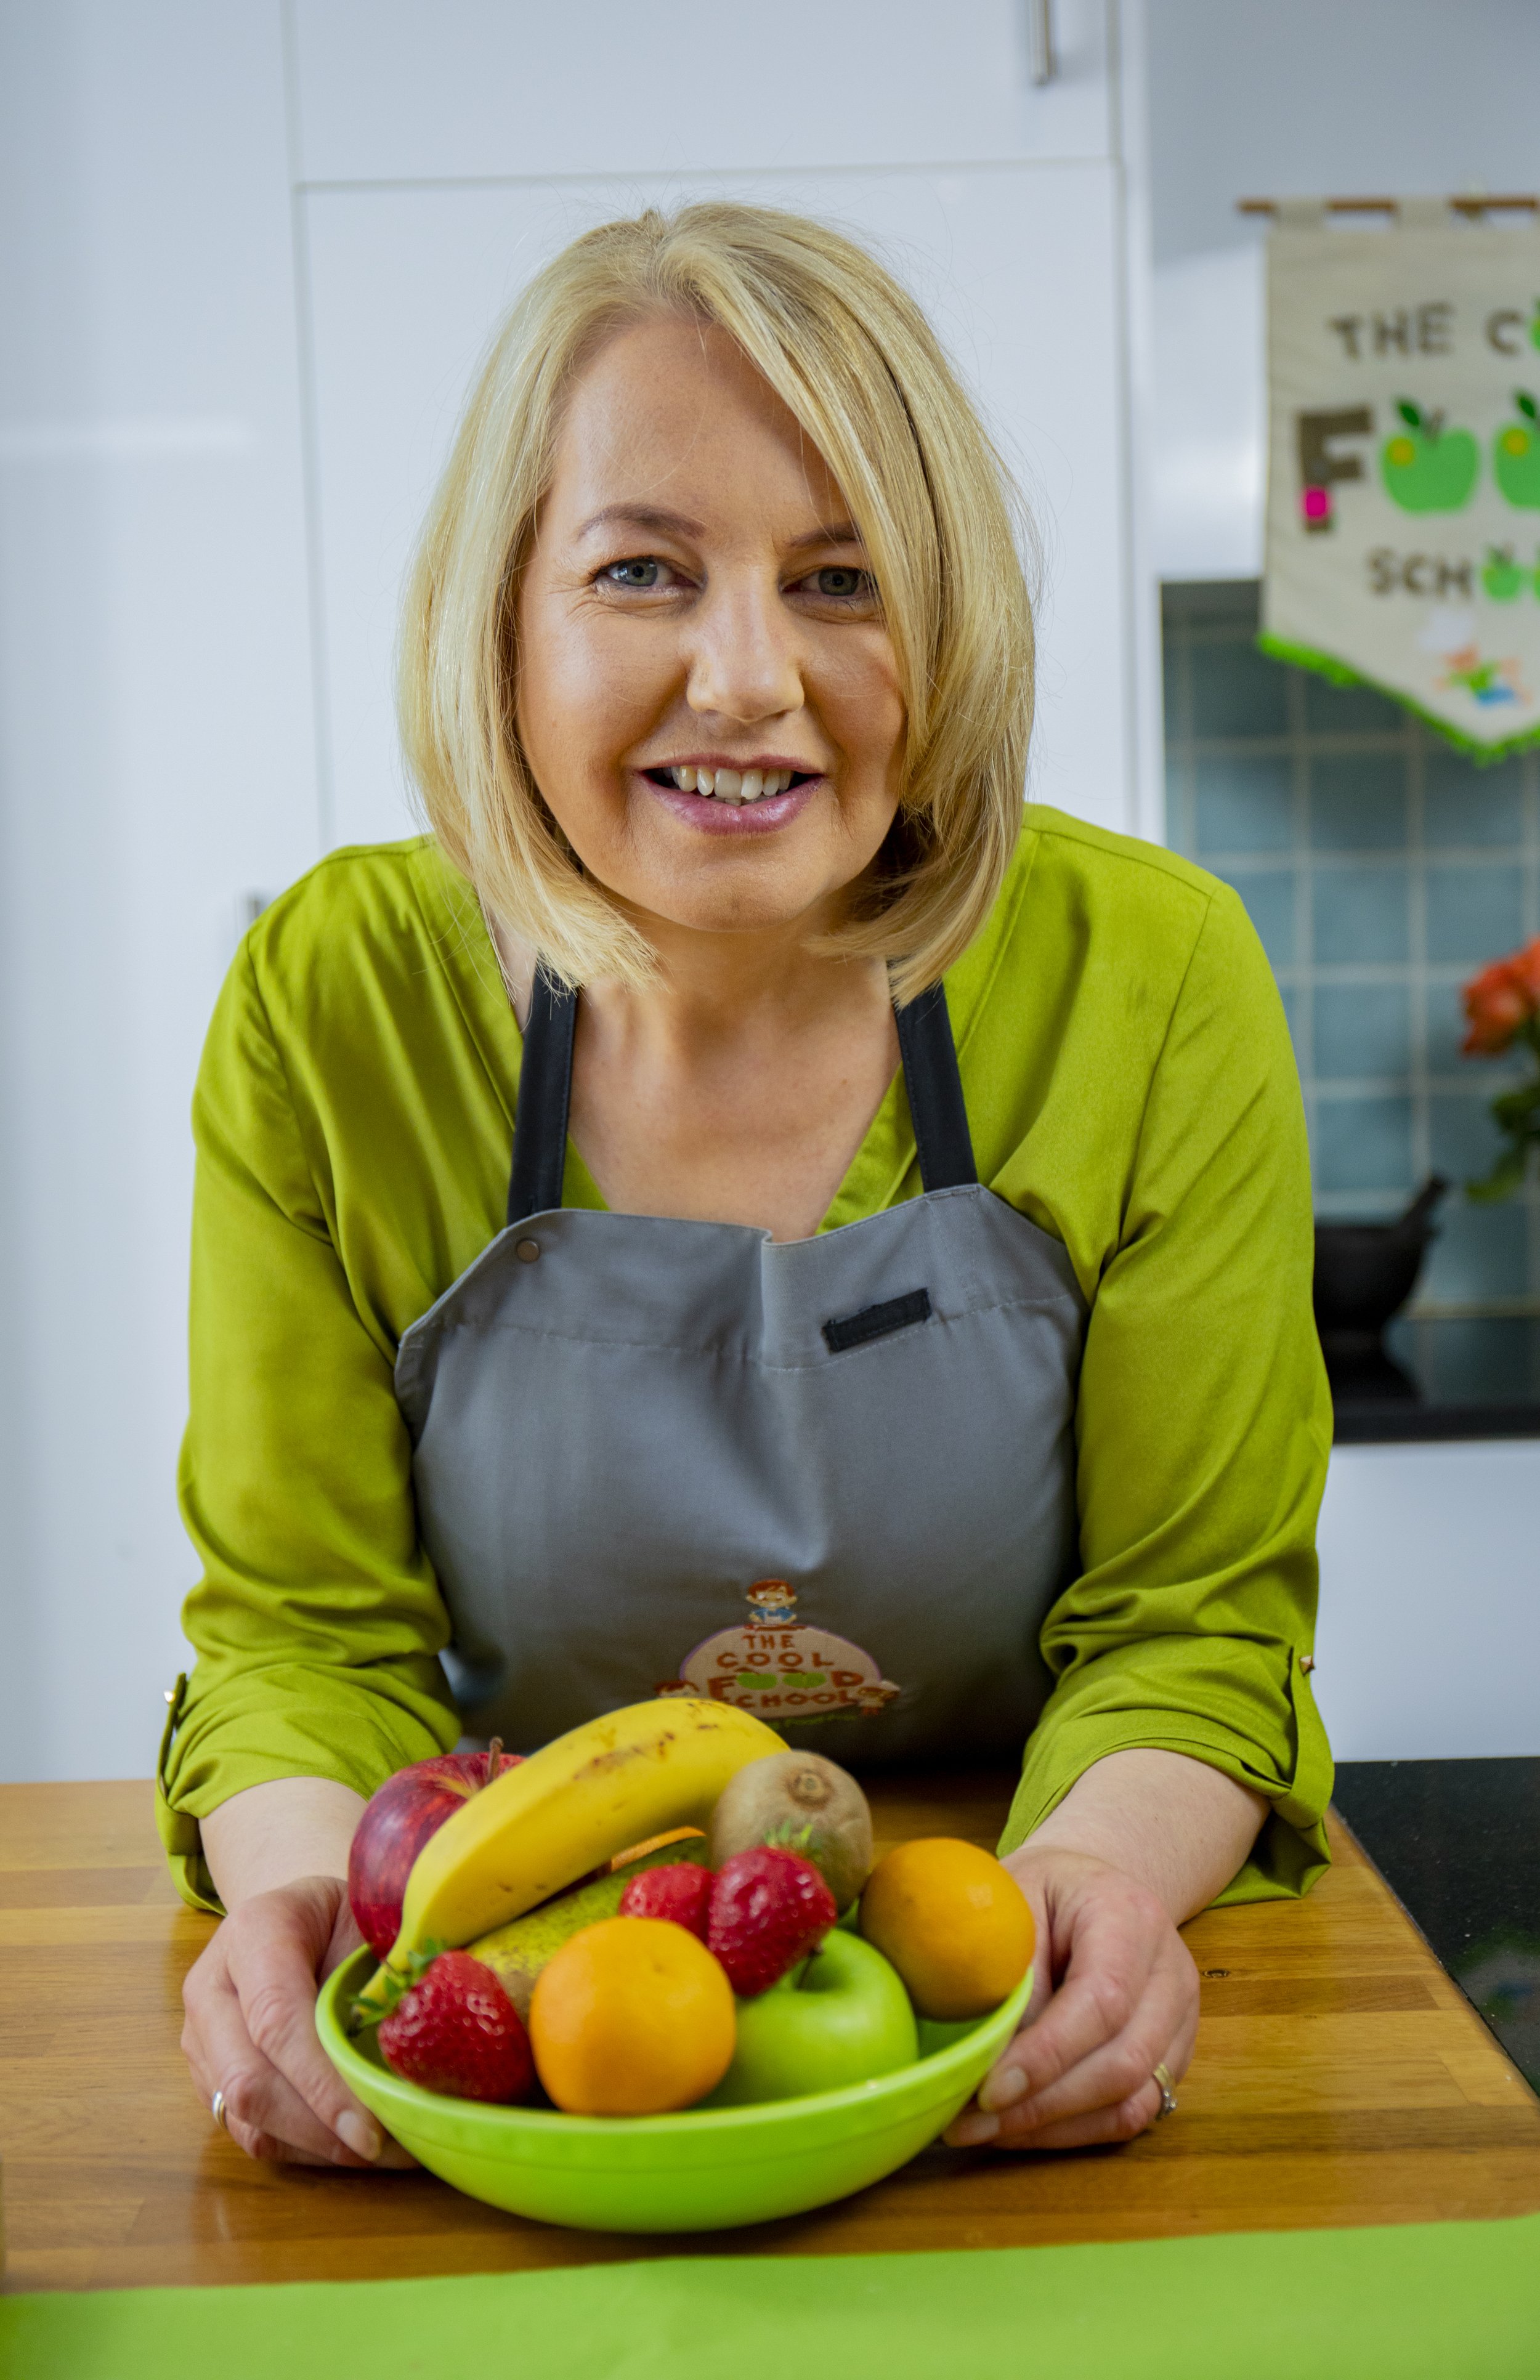 Deirdre Doyle The Cool Food School online programme - with fruit bowl 2.jpg